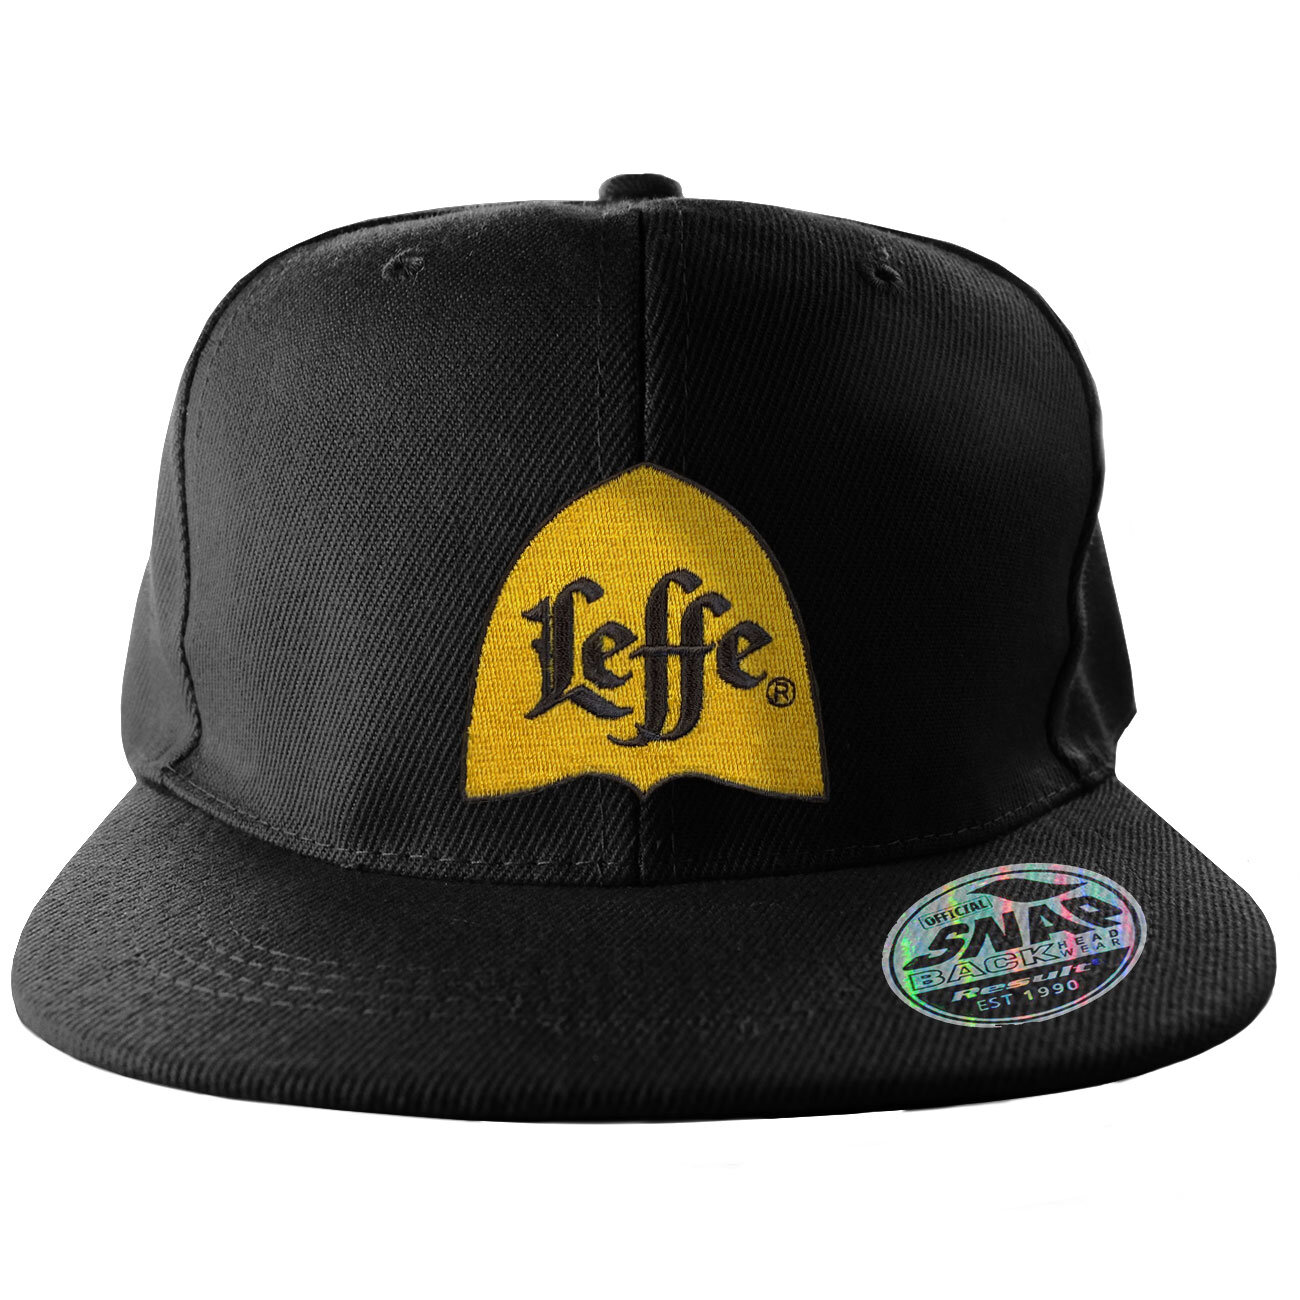 Leffe Alcove Logo Standard Snapback Cap